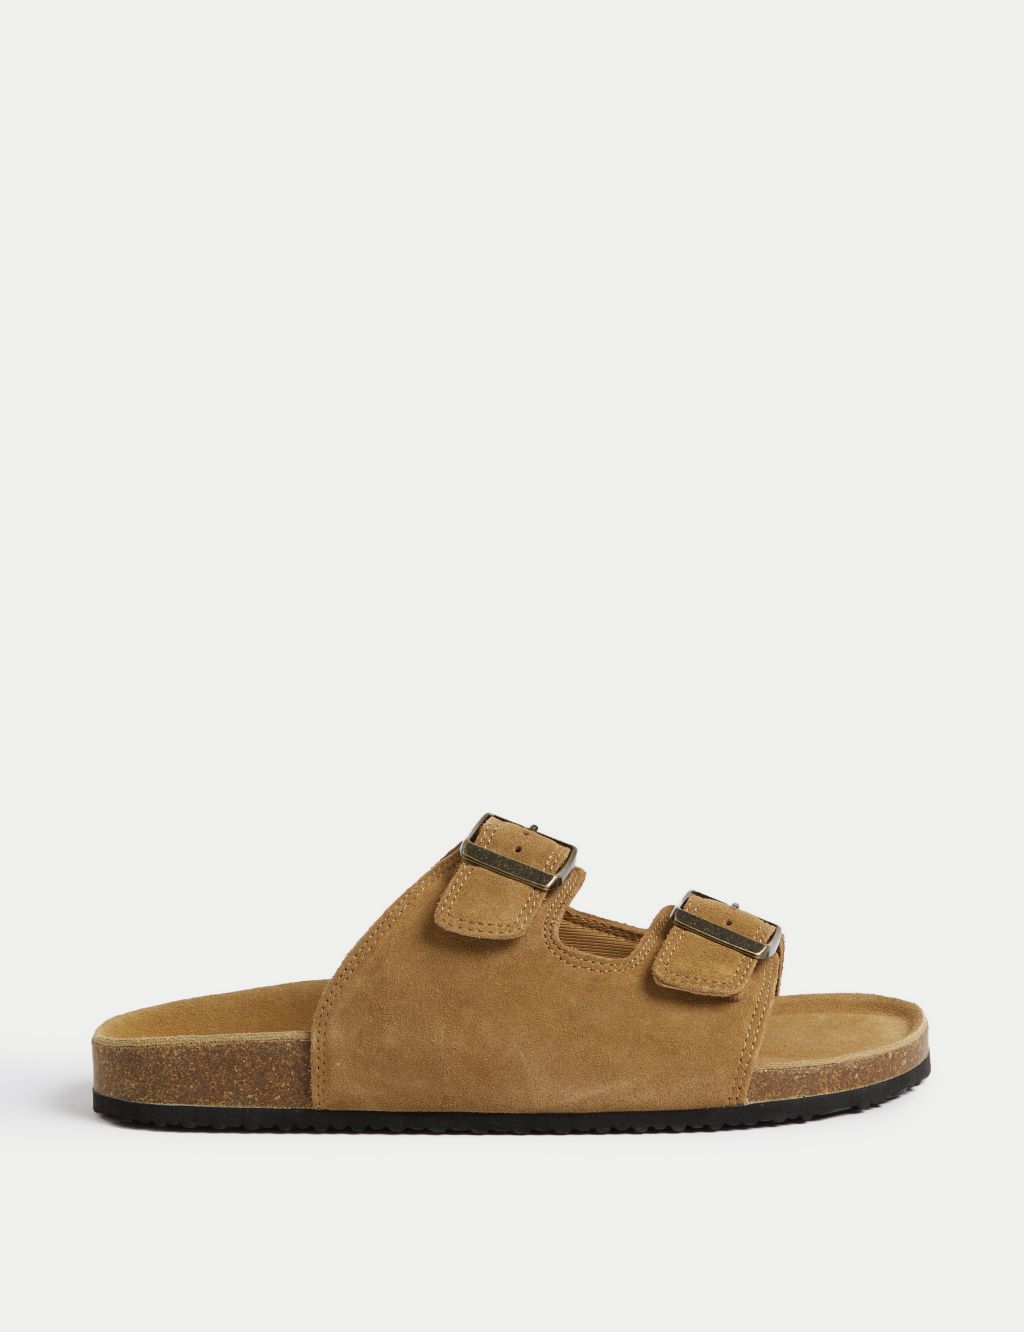 Men’s Summer Sandals | M&S